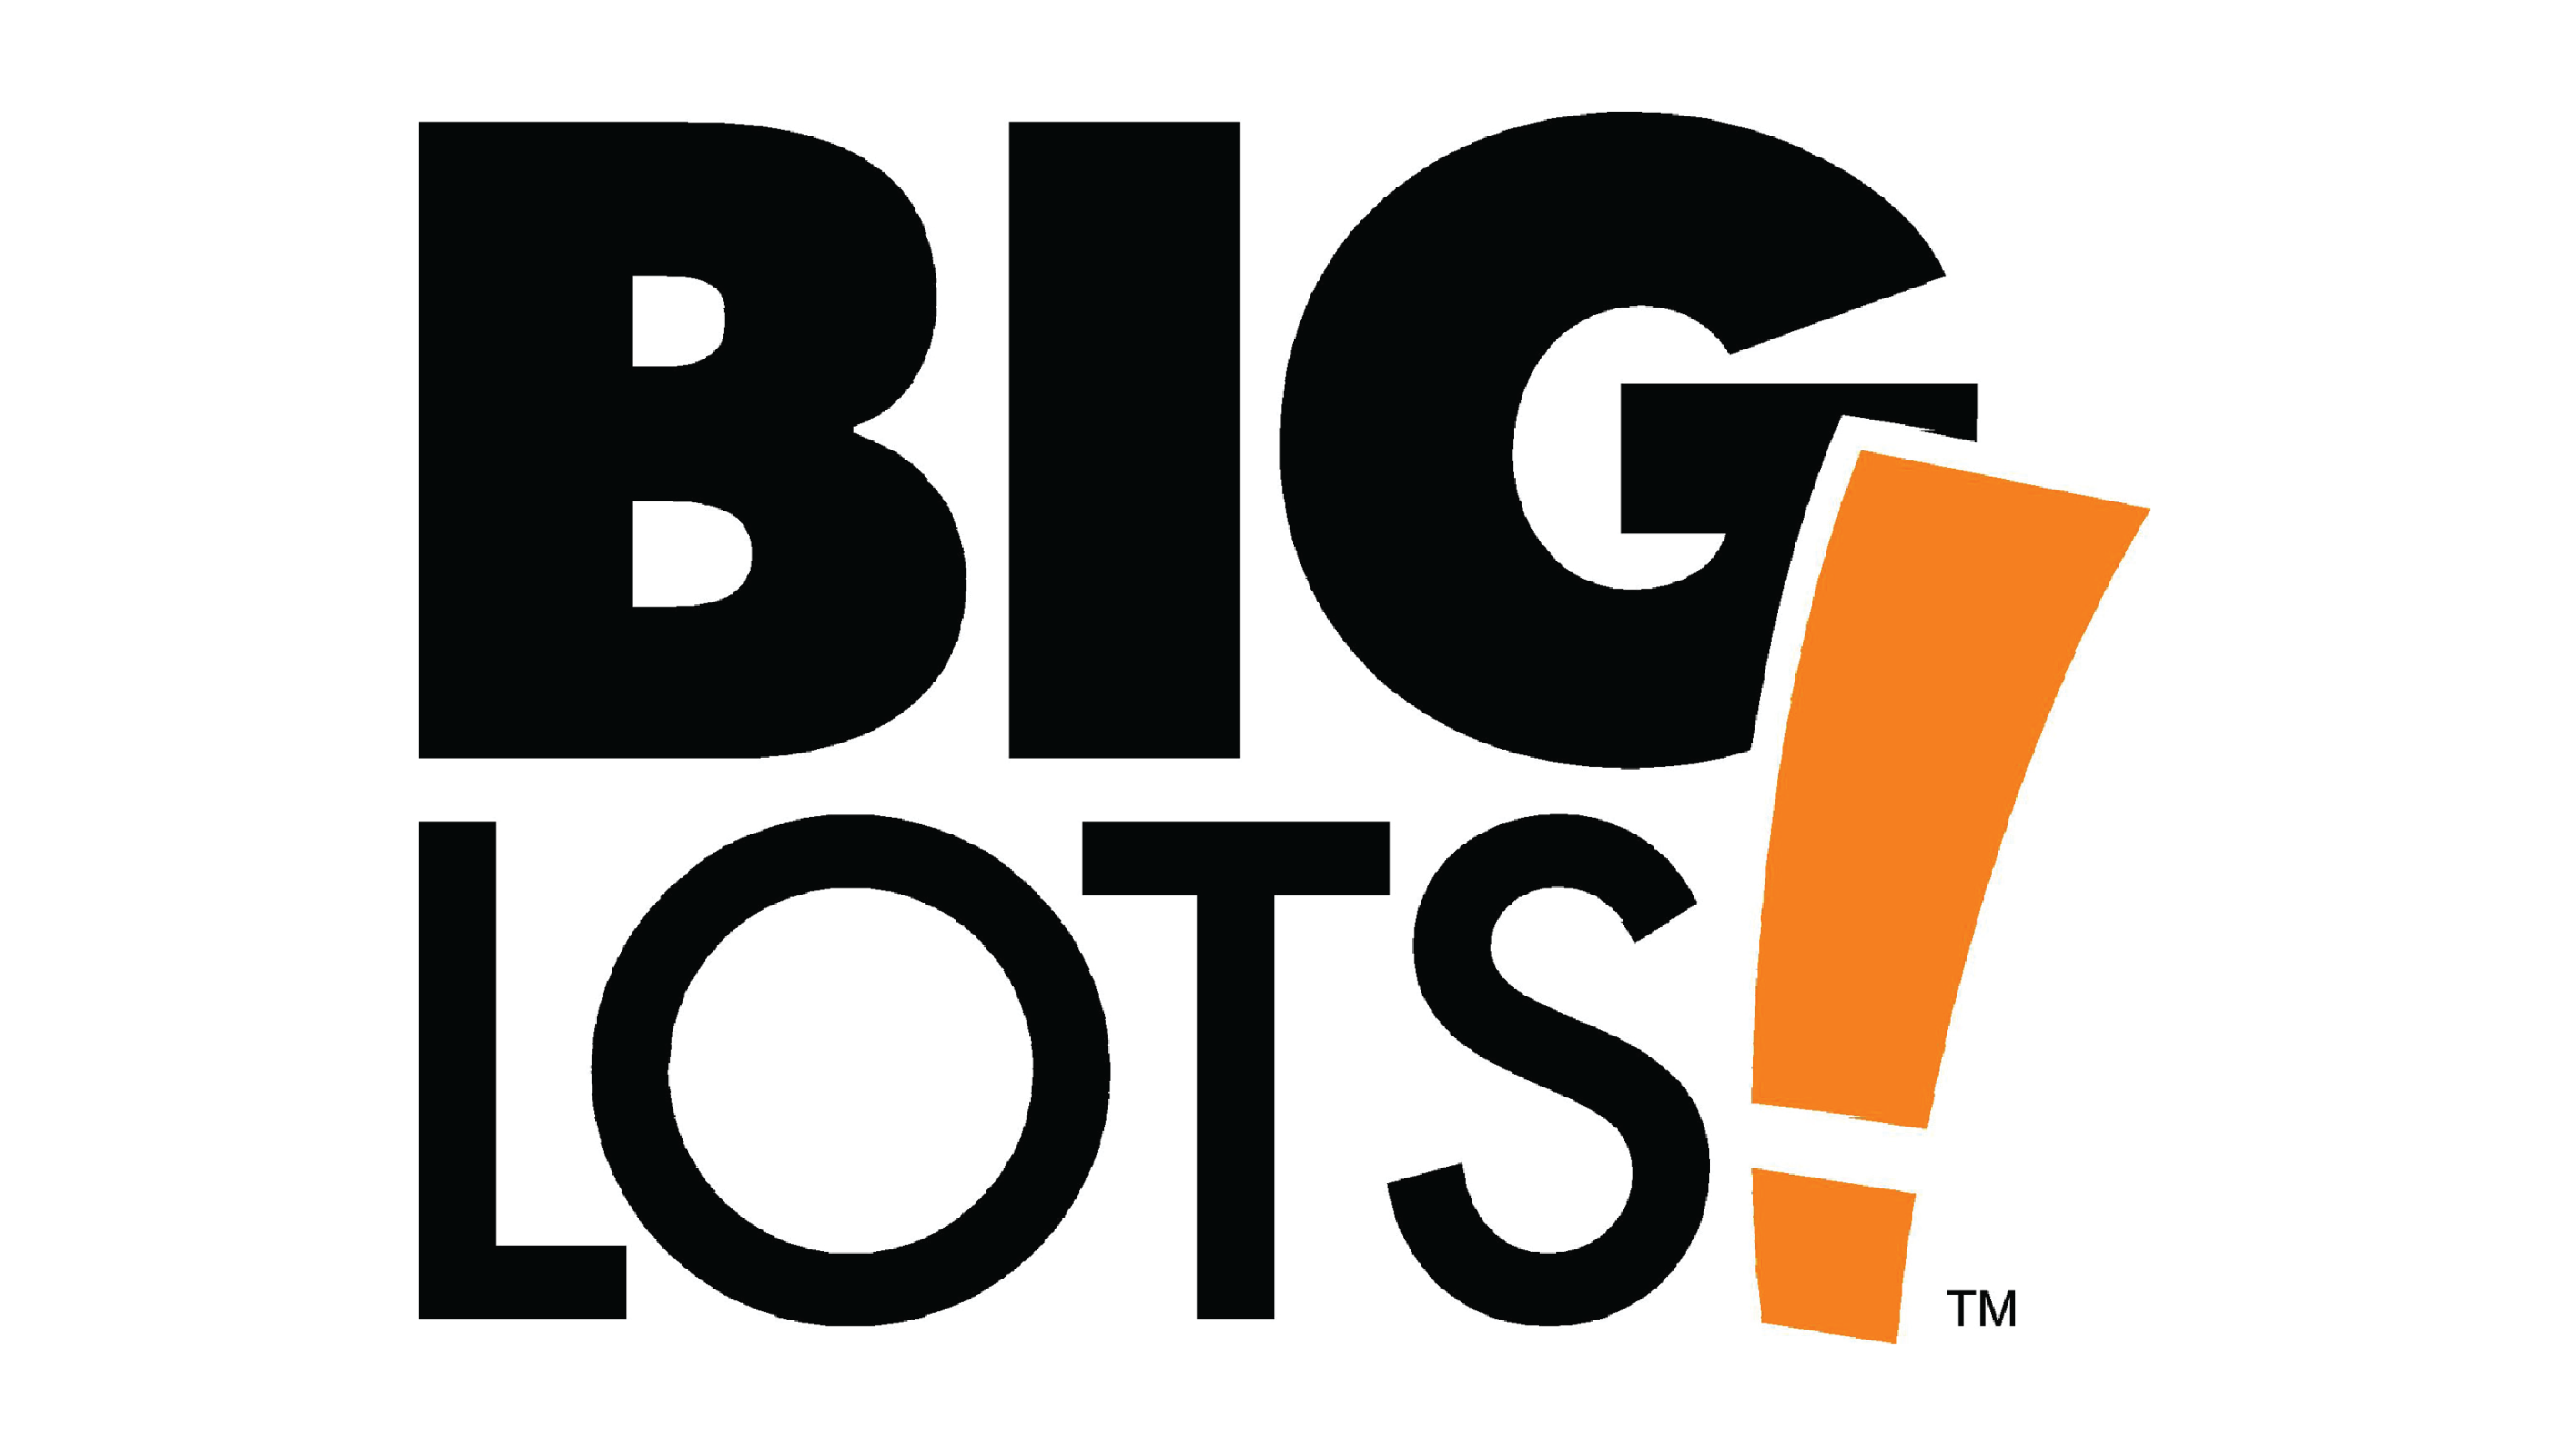 Logo for Big Lots